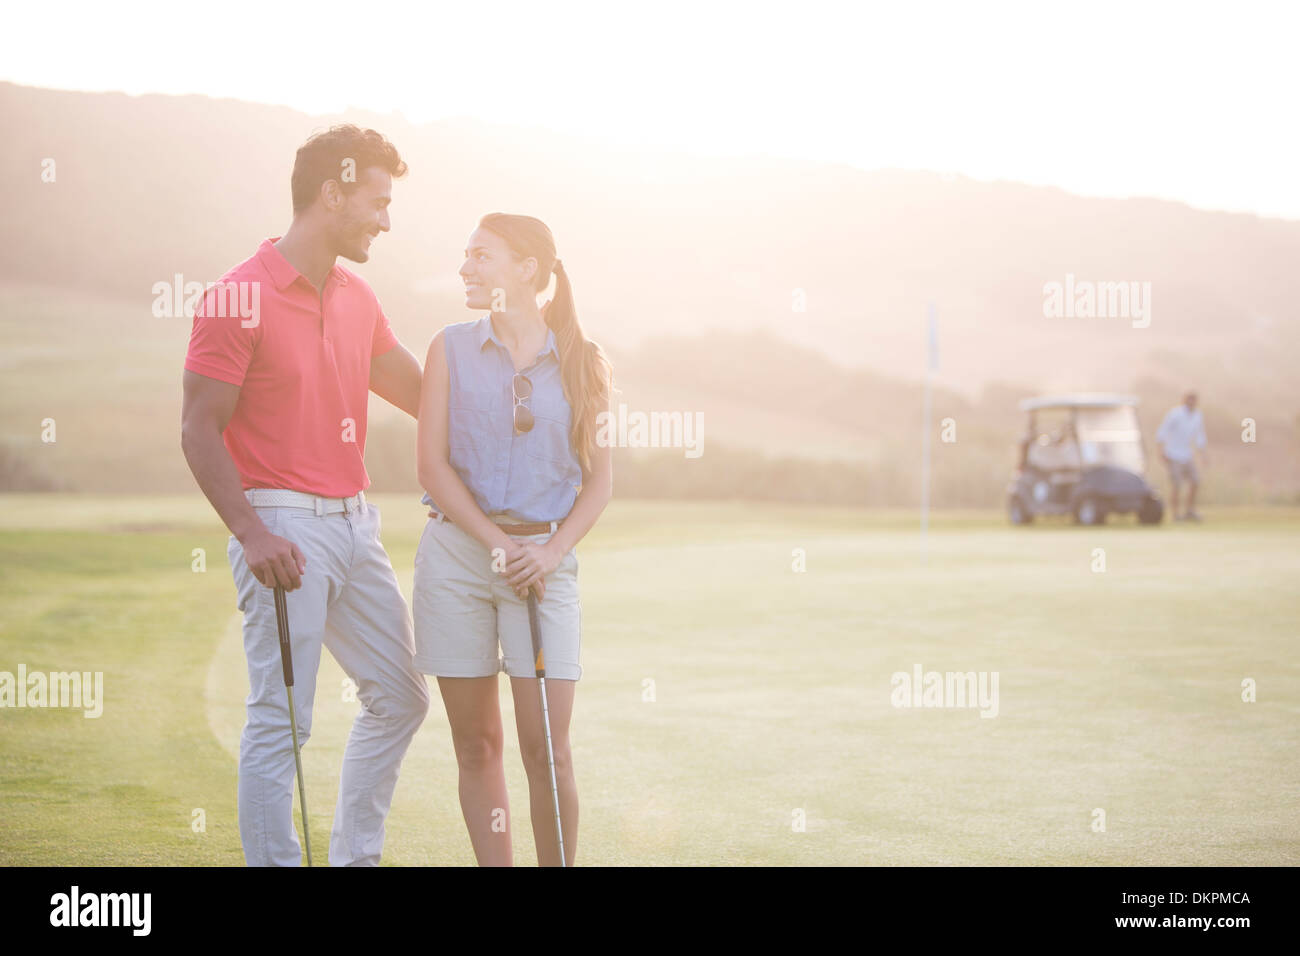 Couple on golf course Stock Photo